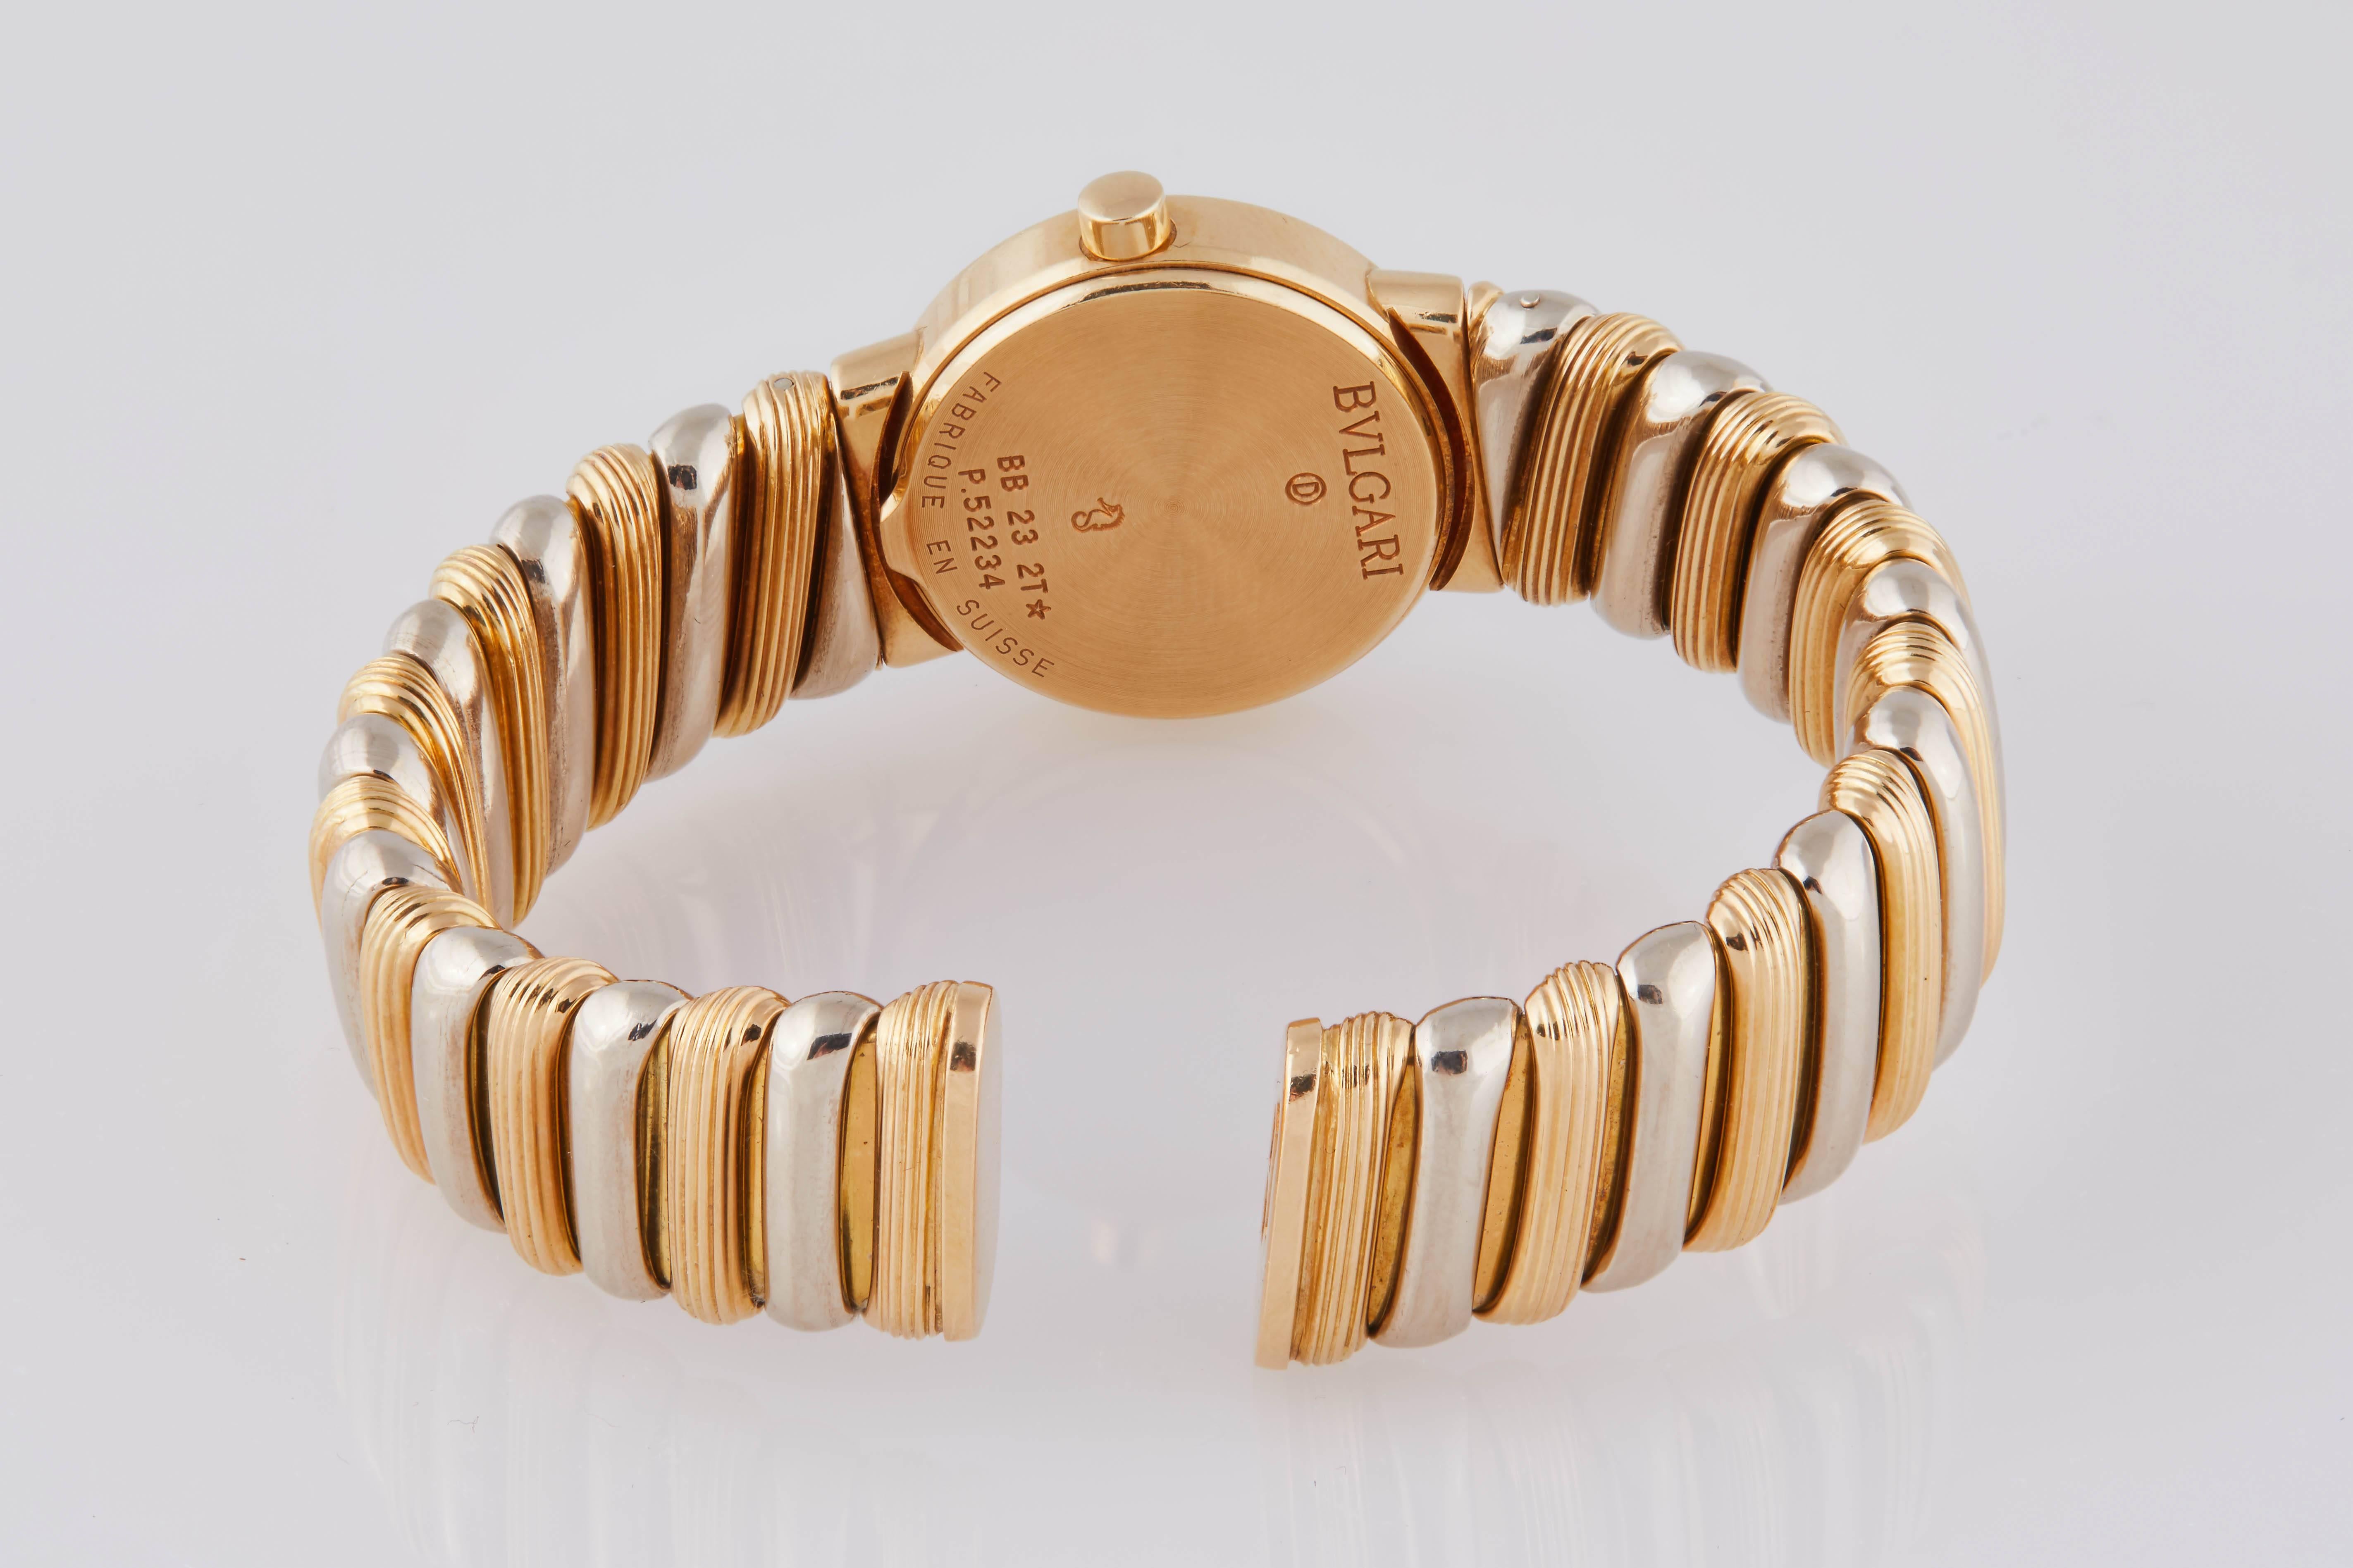 Bulgari Tubogas women's 18k yellow and white gold cuff bracelet watch, c. 1980. Sapphire crystal, logo engraved bezel, black flat dial. 